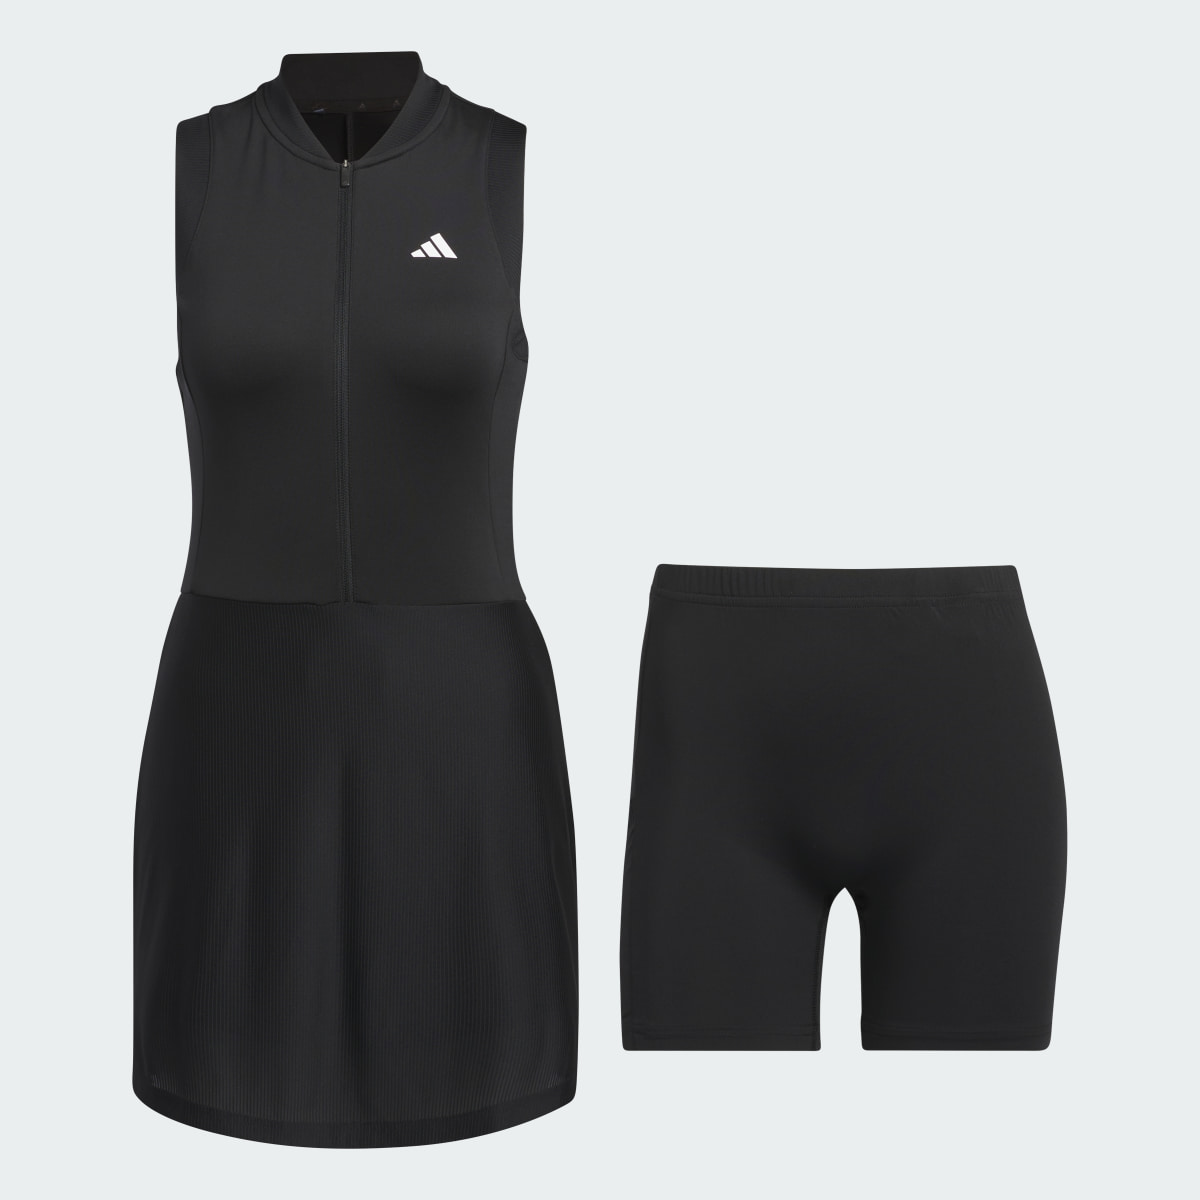 Adidas Women's Ultimate365 Sleeveless Dress. 5